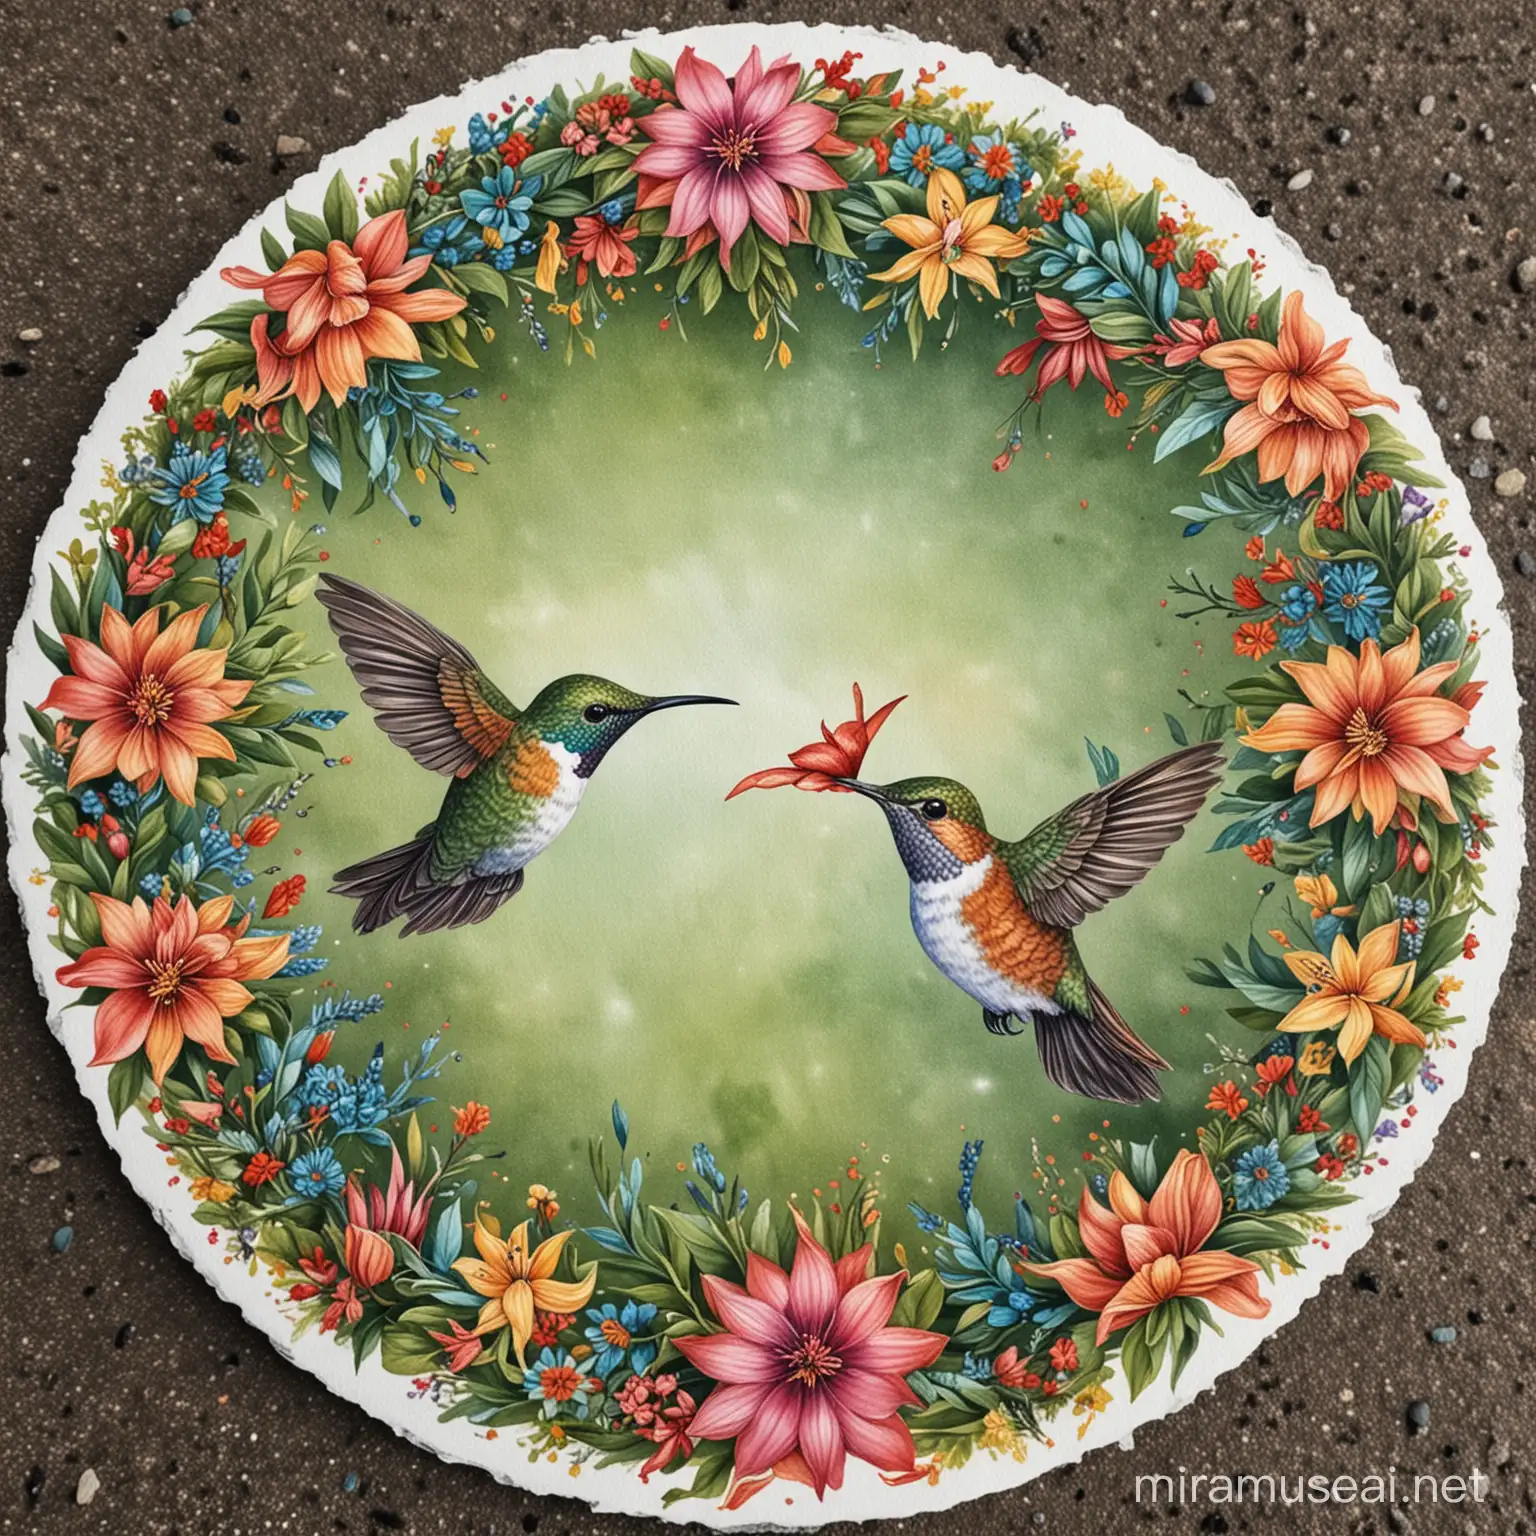 two hummingbirds in a circle like a mandala